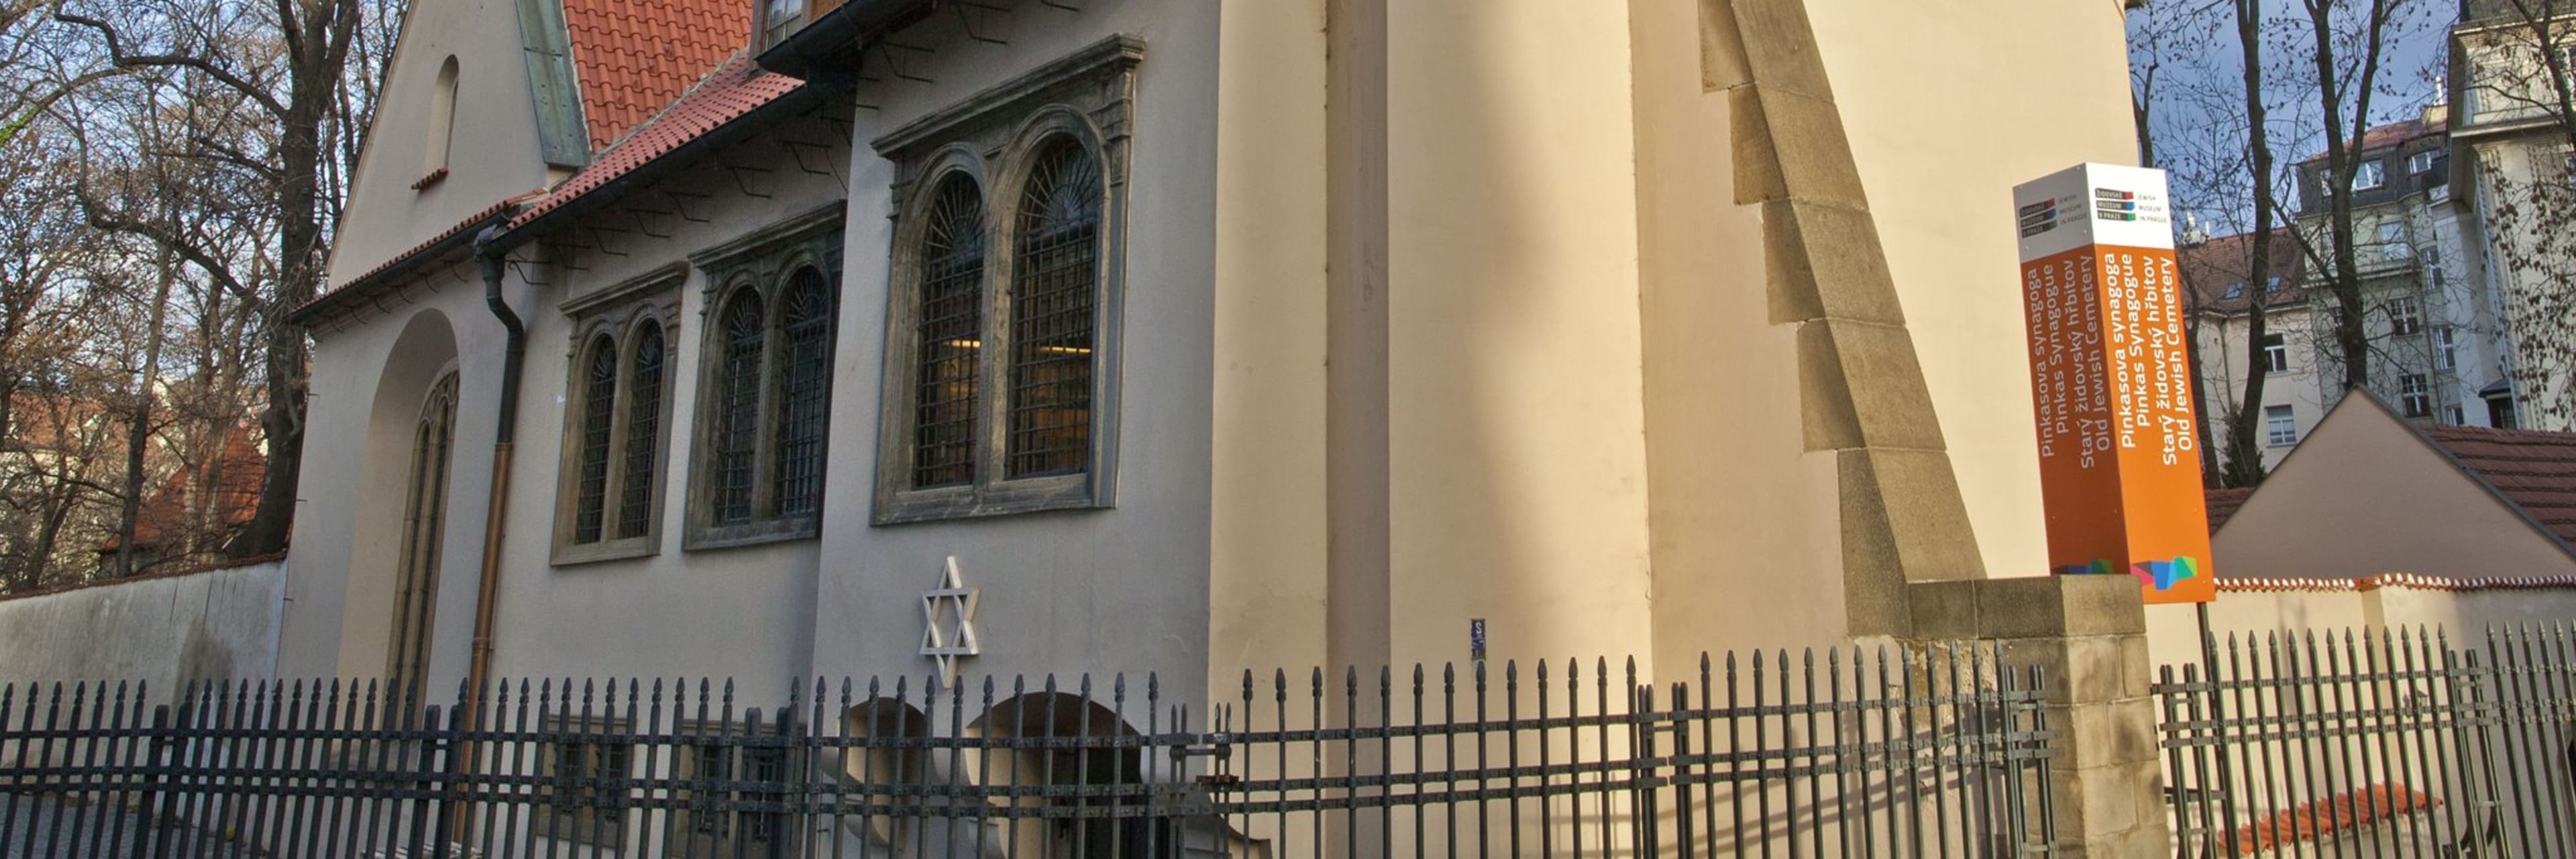 Pinkas Synagogue – Prague Jewish Quarter